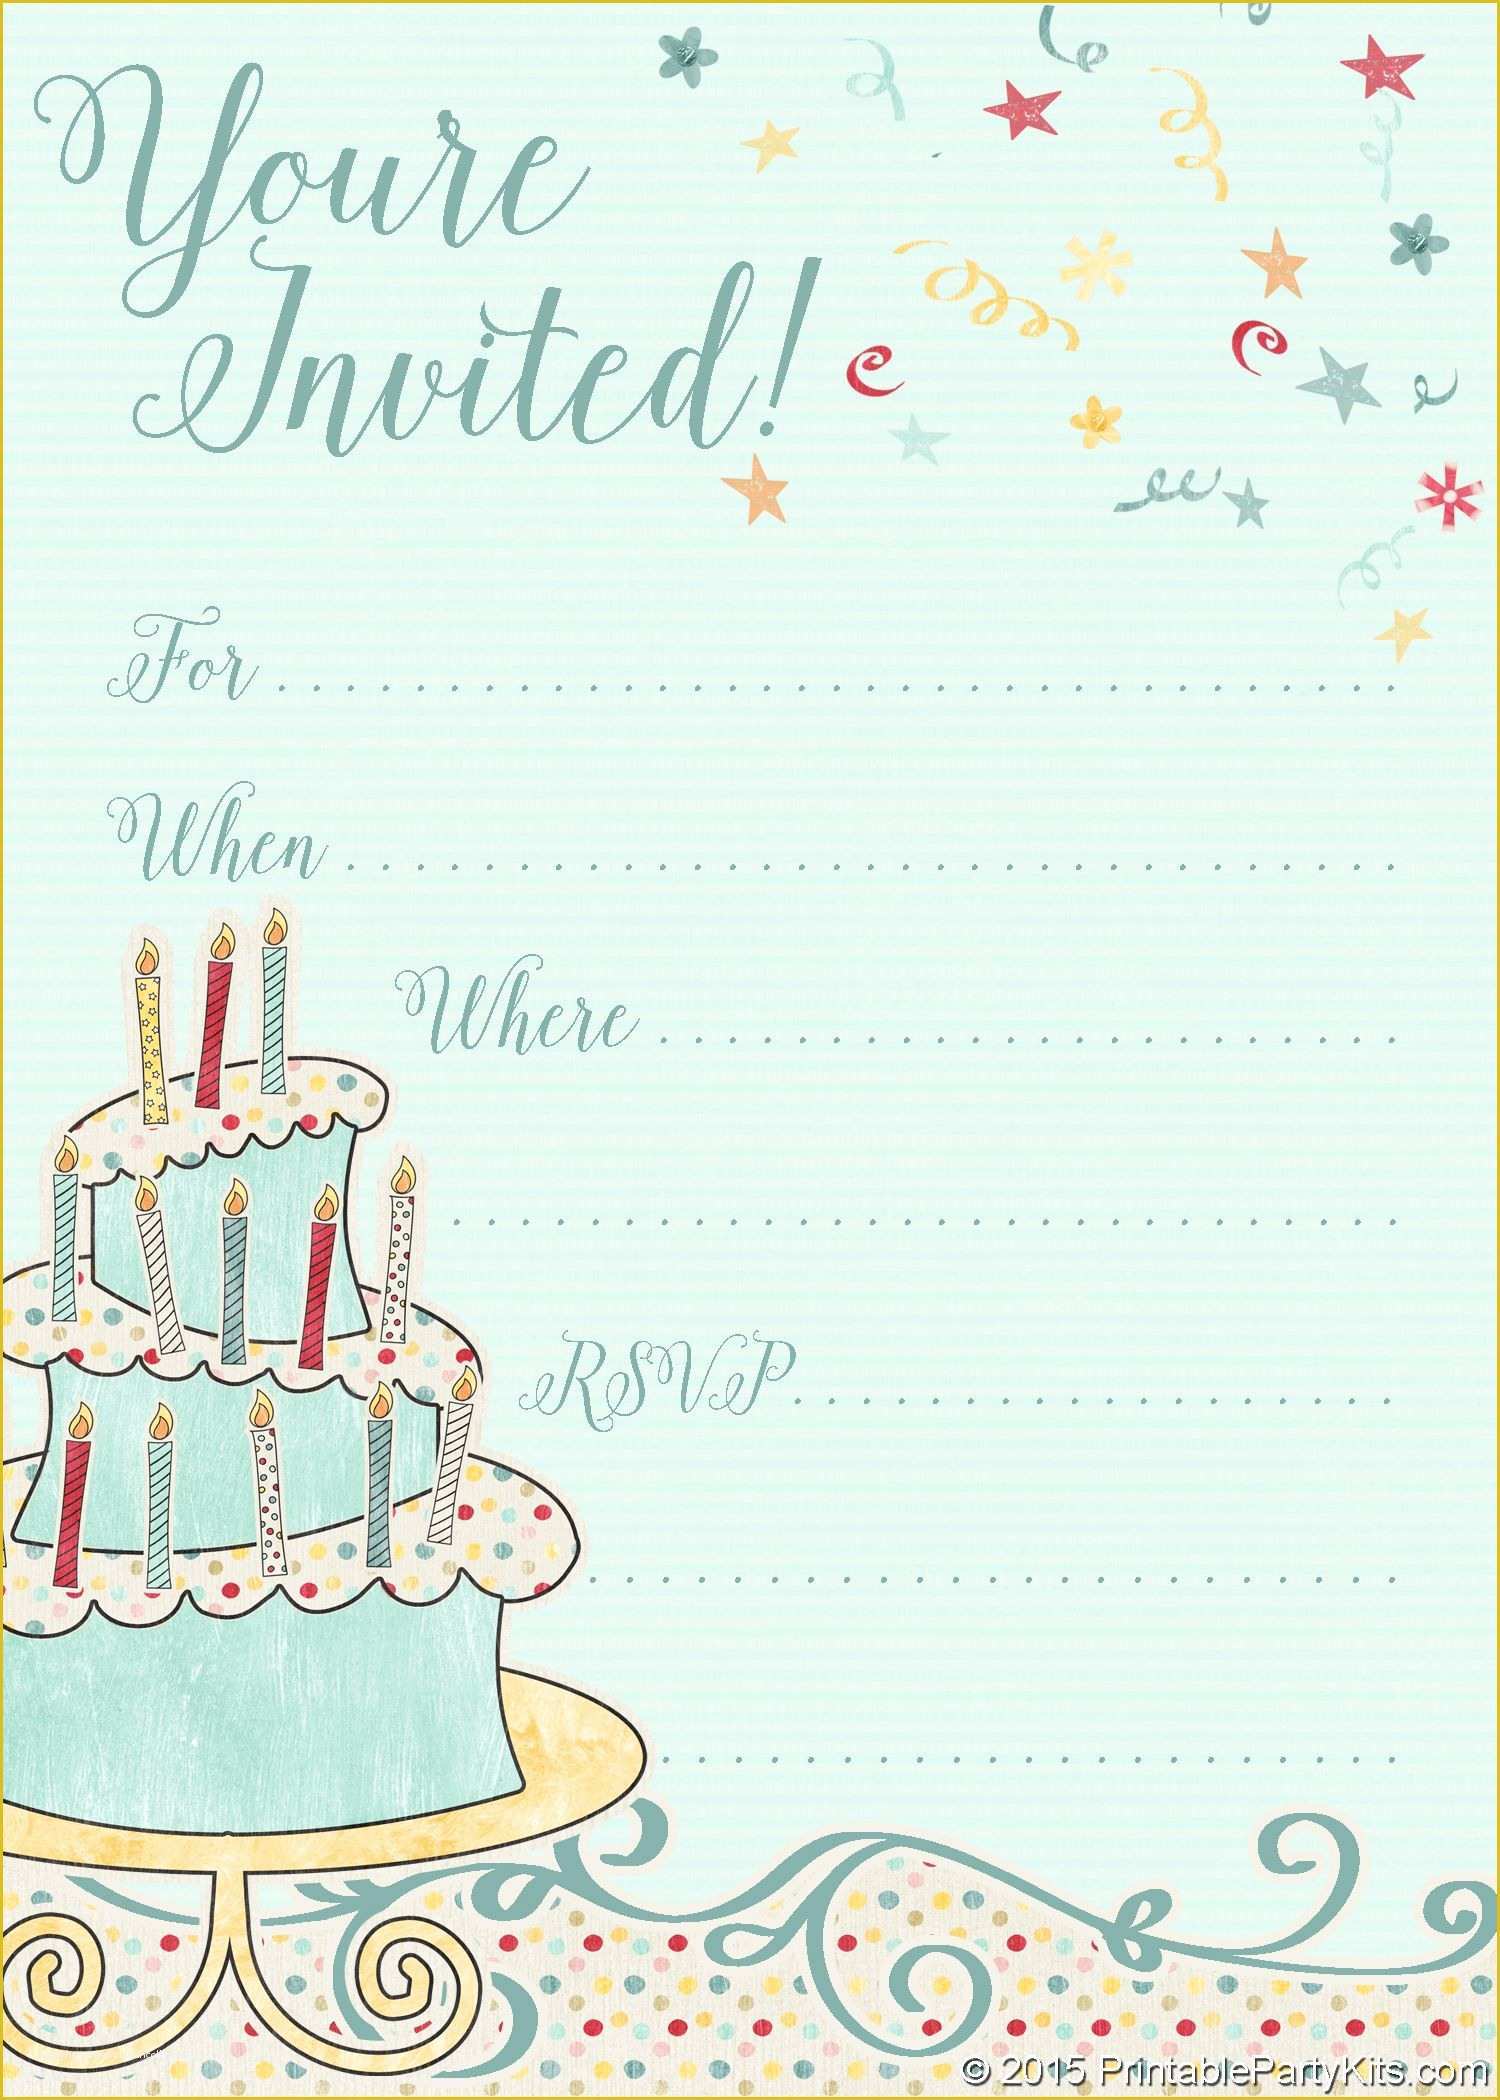 Free Birthday Party Invitation Templates Of Free Printable Whimsical Birthday Party Invitation